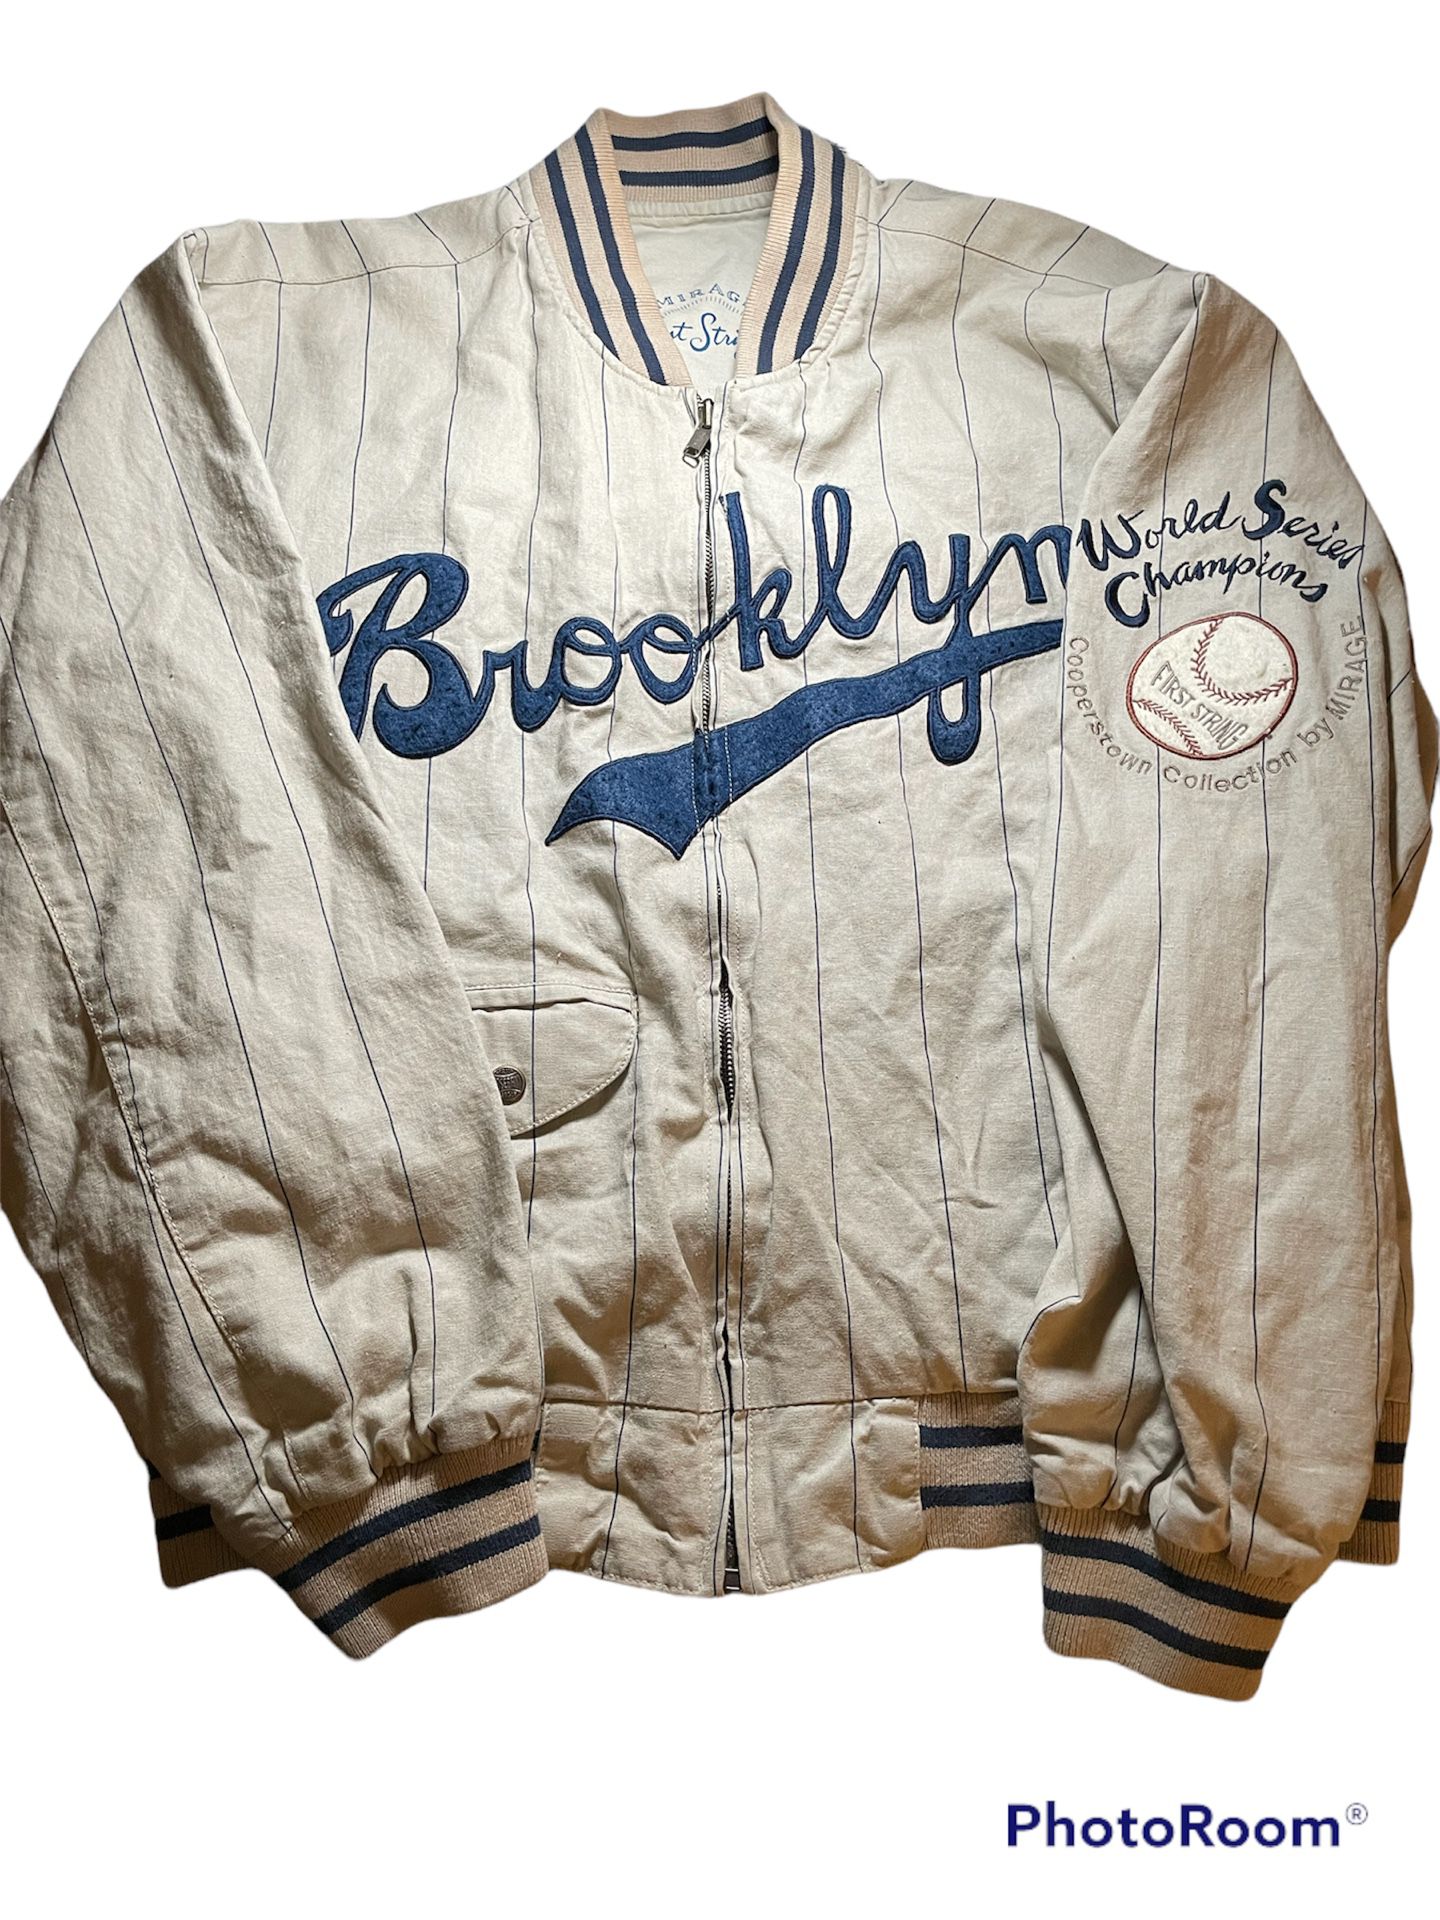 brooklyn dodgers jacket